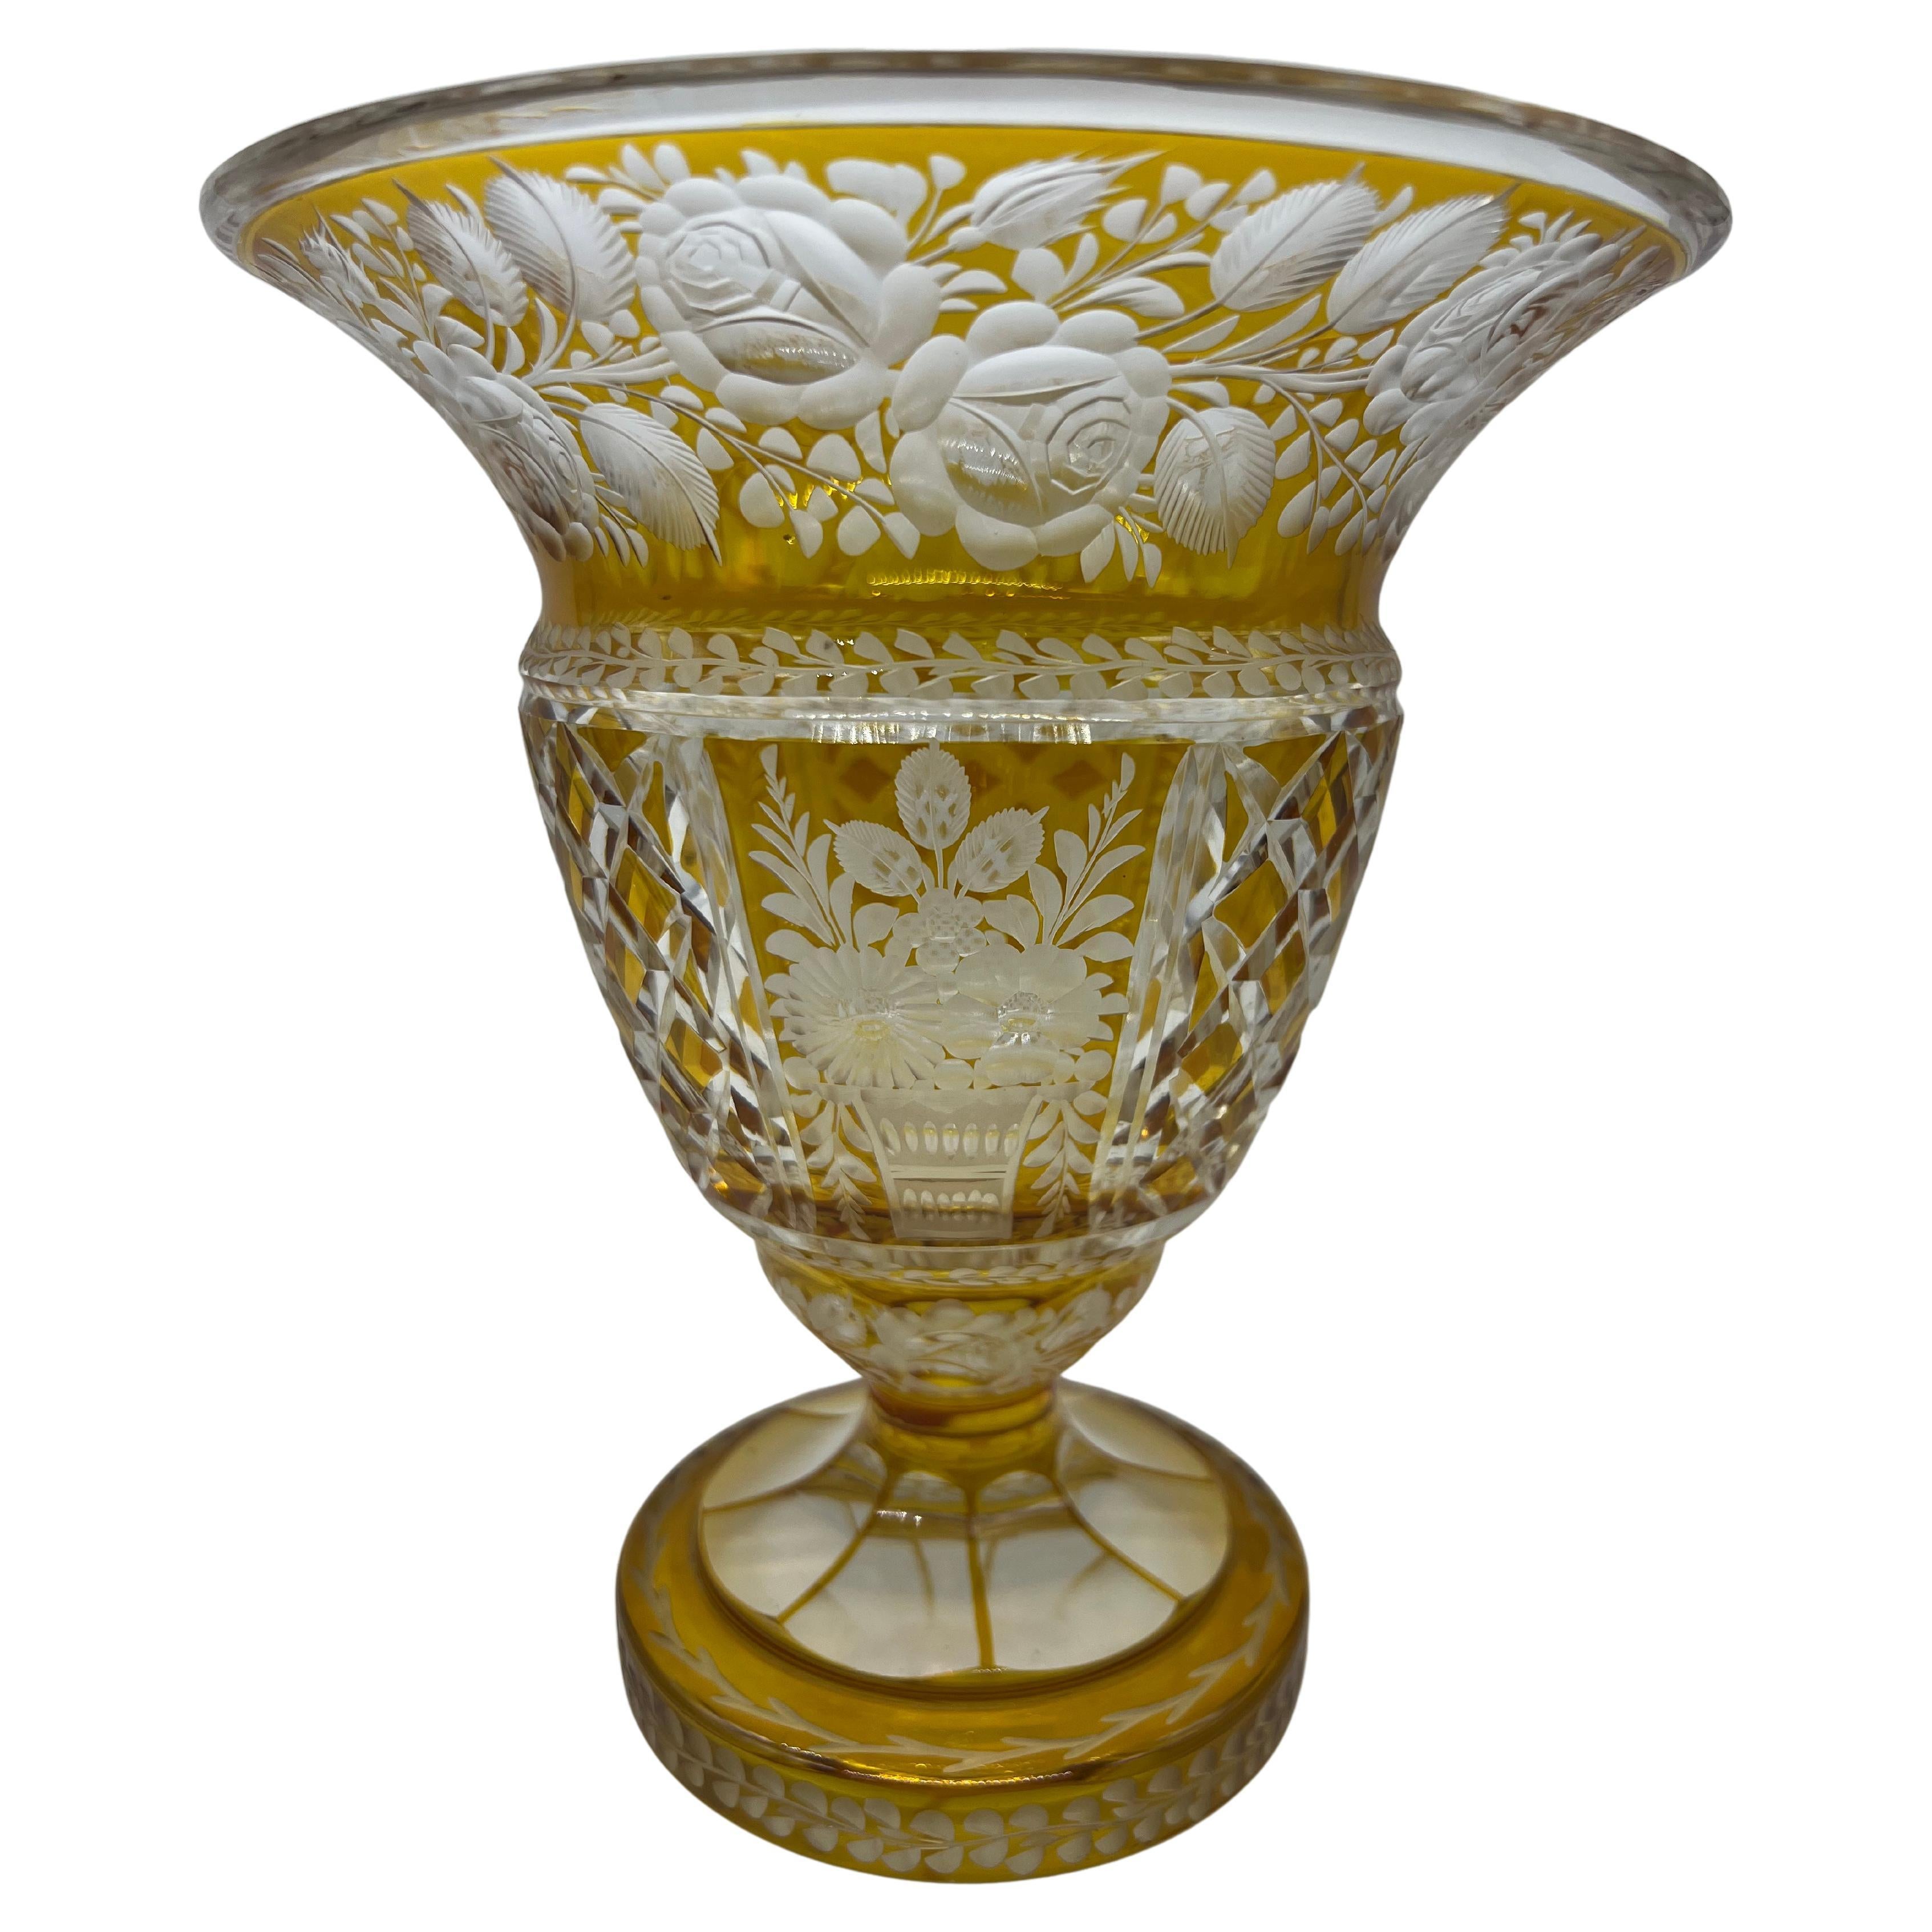 Bohemian Crystal Vases - 67 For Sale on 1stDibs | bohemia crystal vase  price list, vintage bohemia crystal vase, bohemian crystal vase value